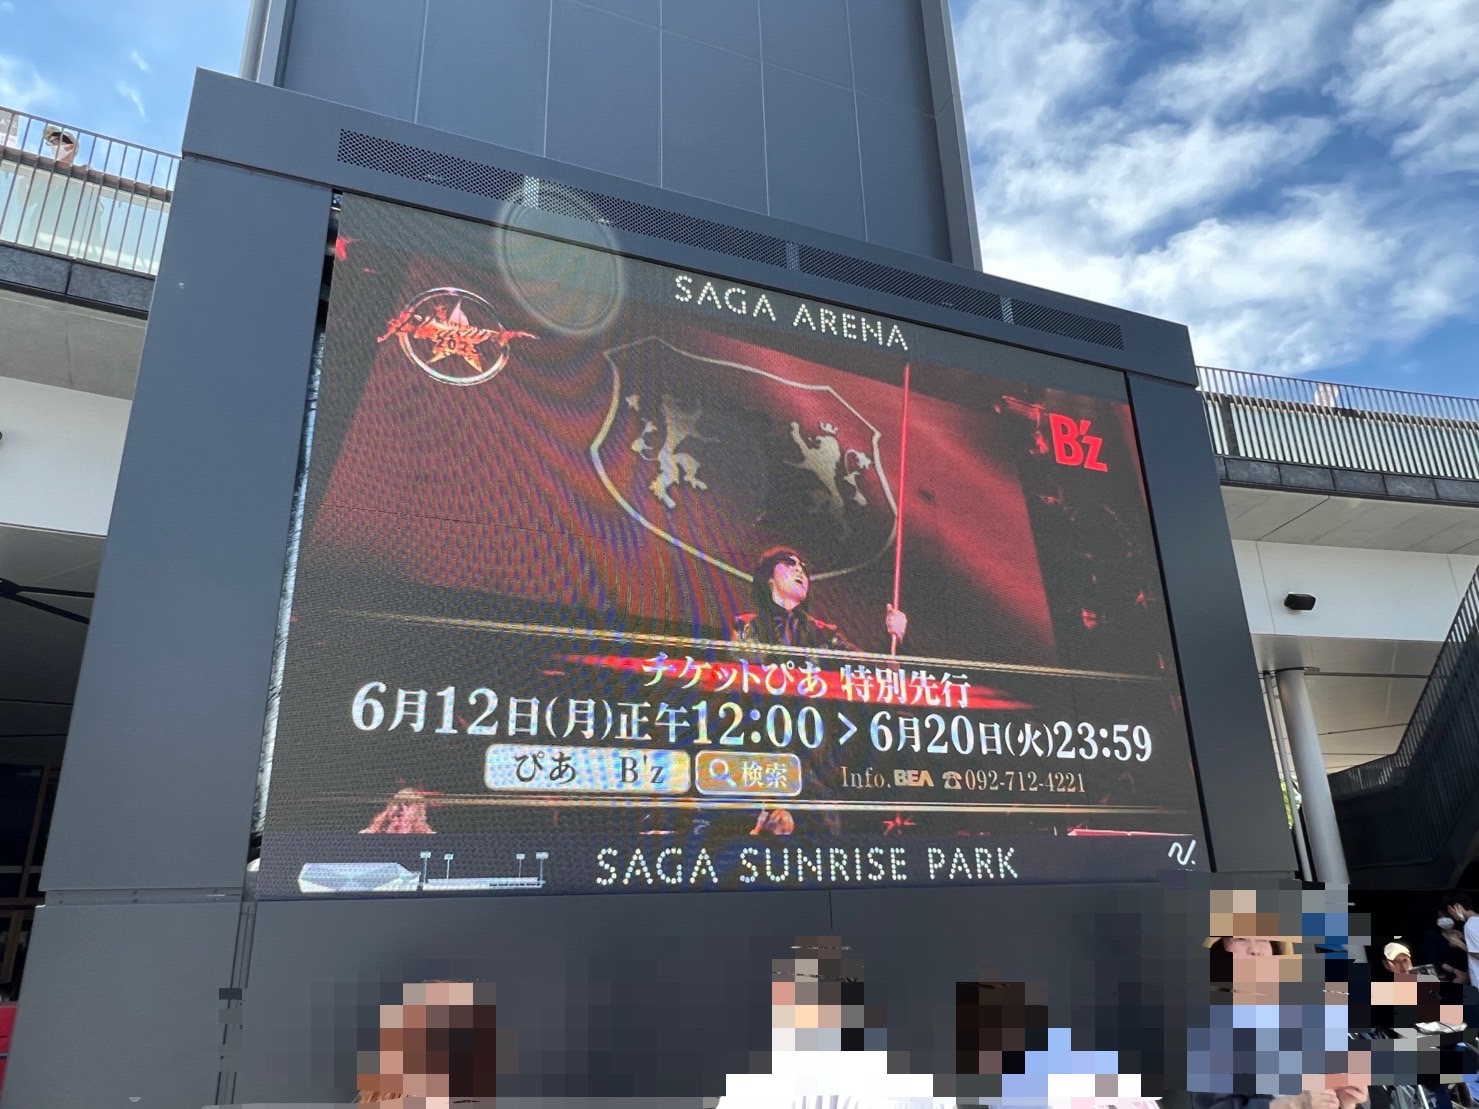 『B'z LIVE-GYM Pleasure 2023 -STARS-』福岡公演のぴあ受付を宣伝するSAGAアリーナのサイネージ広告の様子